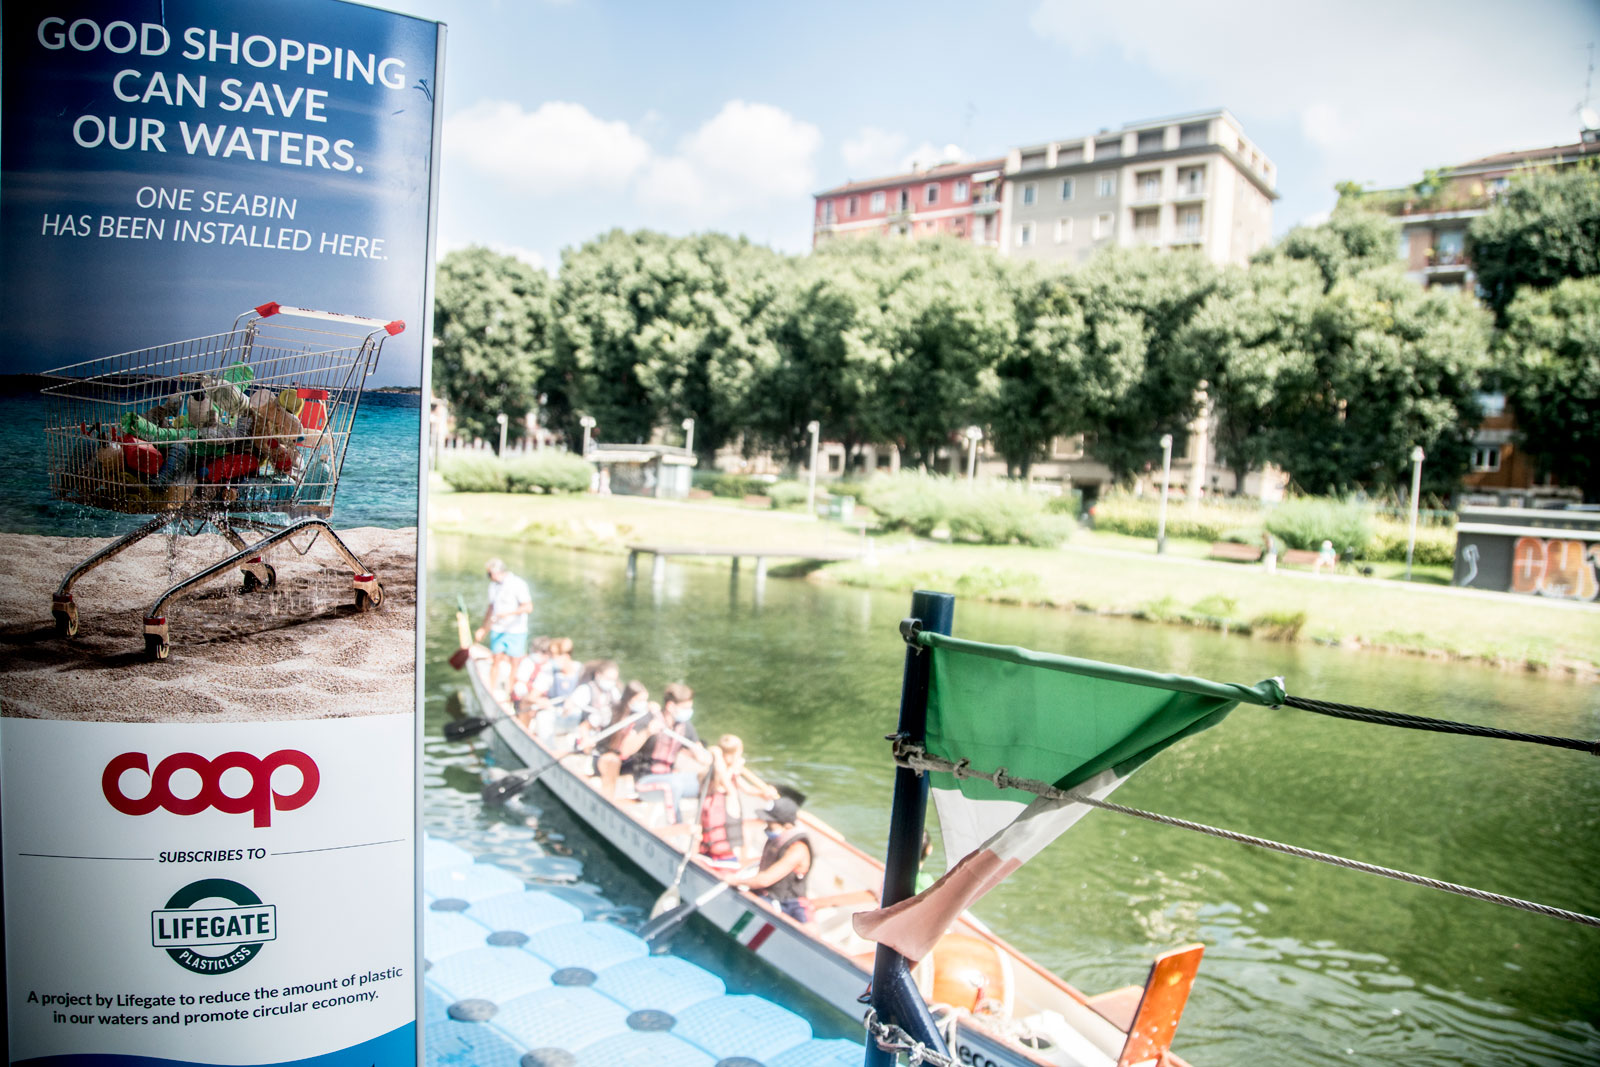 La campagna Coop “Le nostre acque” approda a Milano